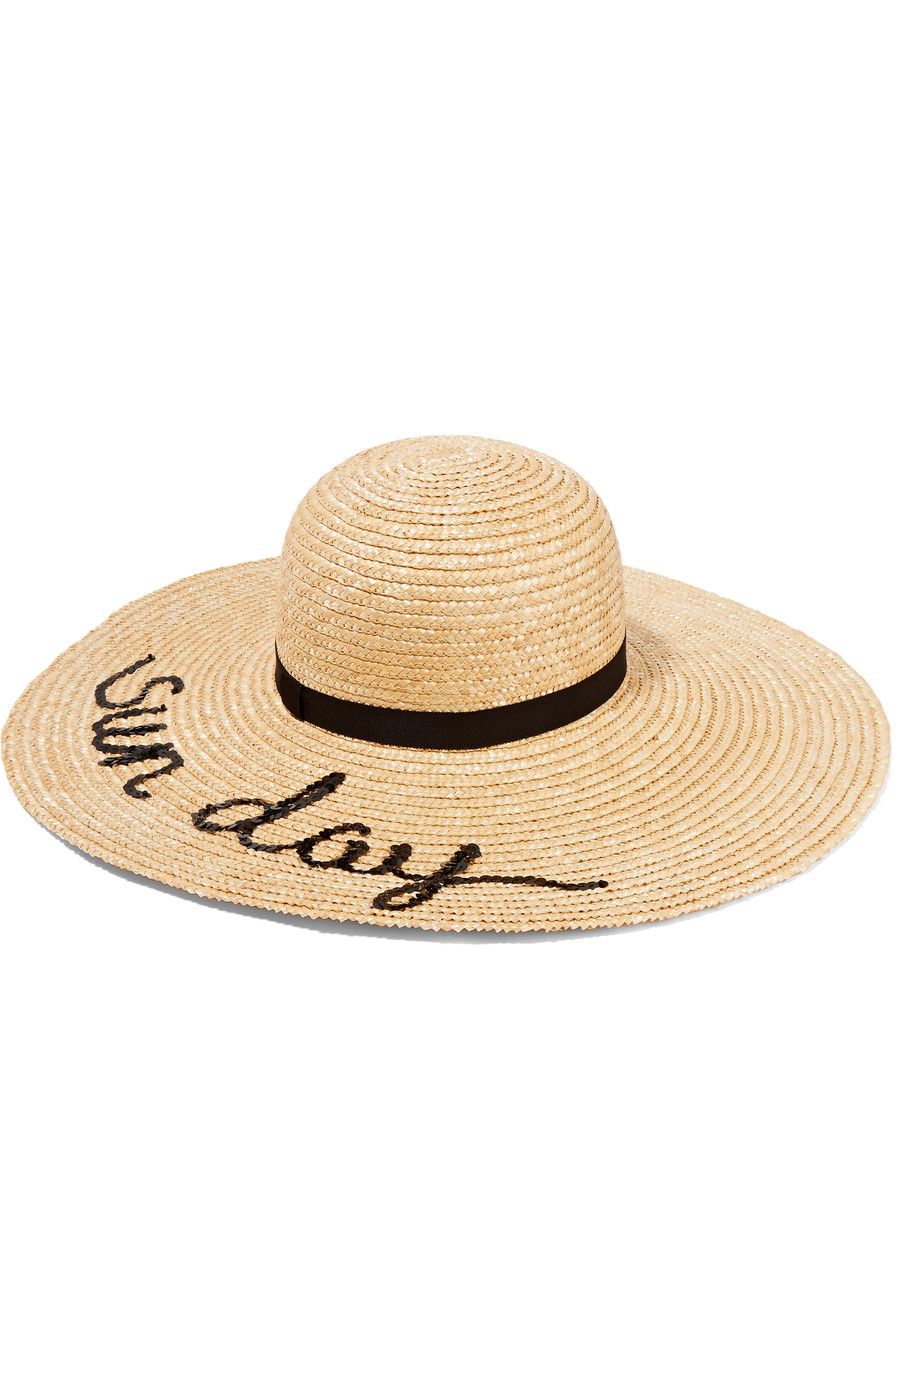 Clothing, Hat, Sun hat, Beige, Headgear, Fashion accessory, Costume accessory, Sombrero, Cap, Fedora, 